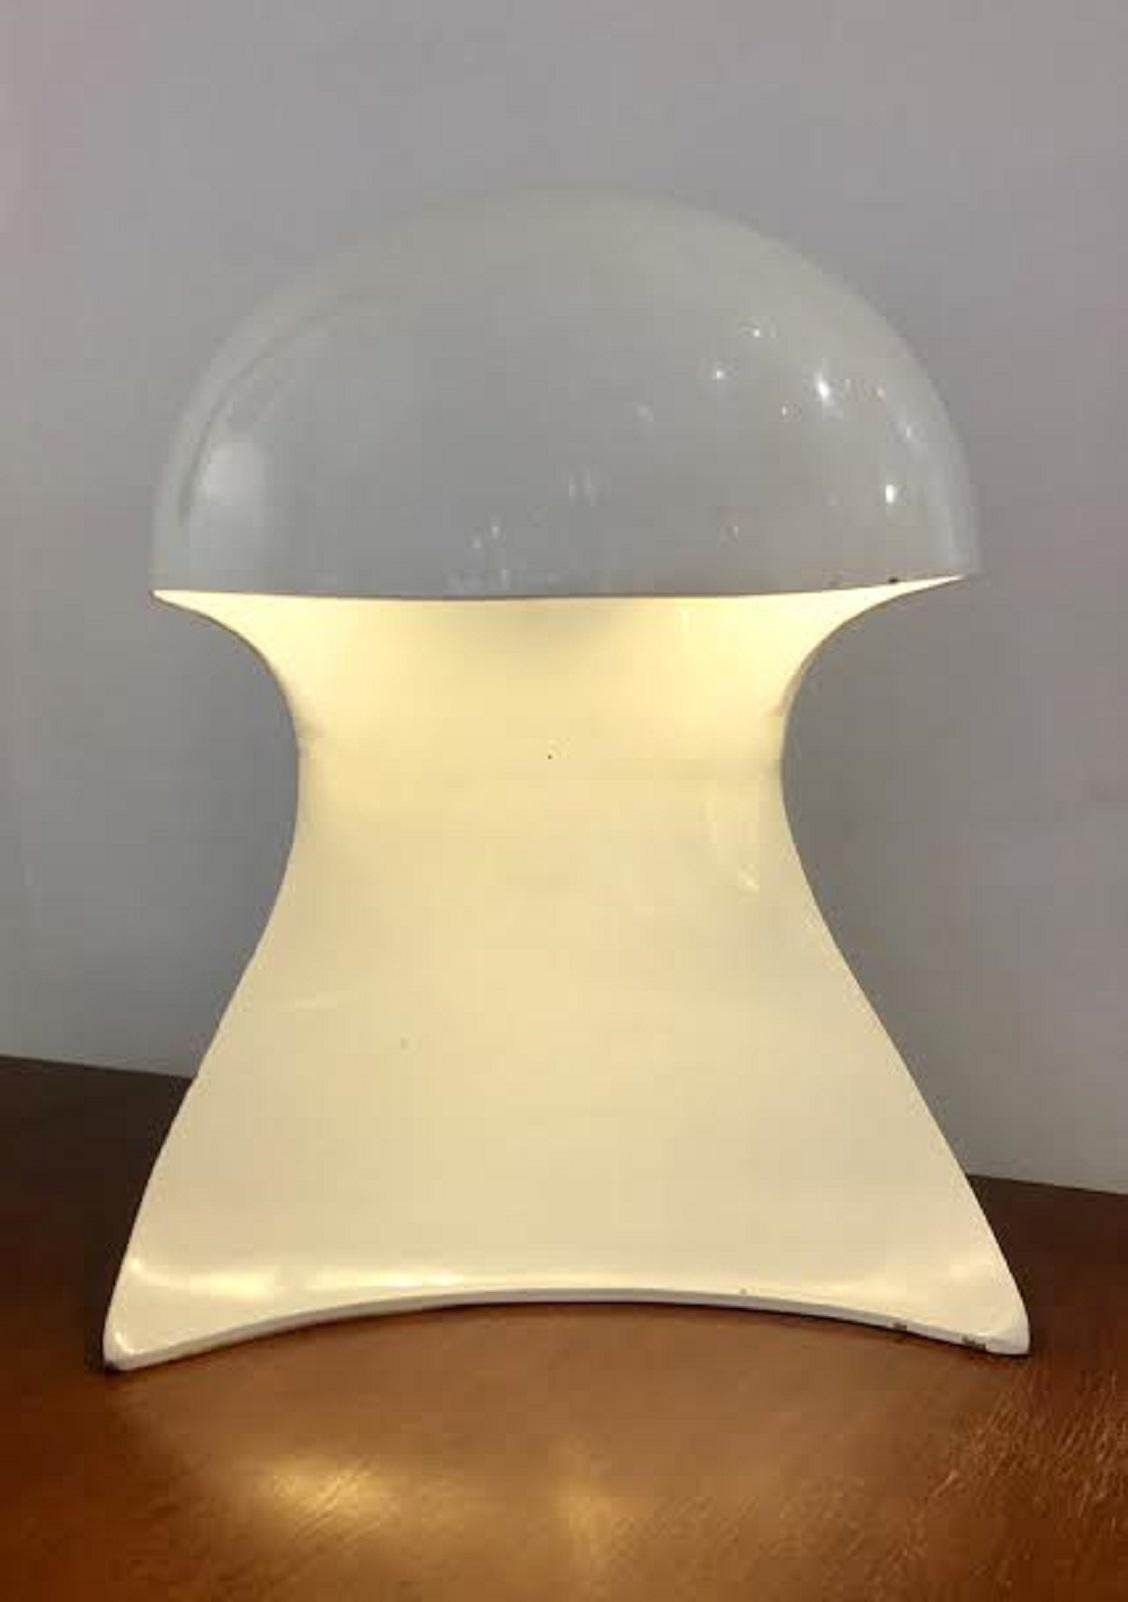 Dania table lamp by Dario Tognon and Studio Celli for Artemide, Italy, 1969.